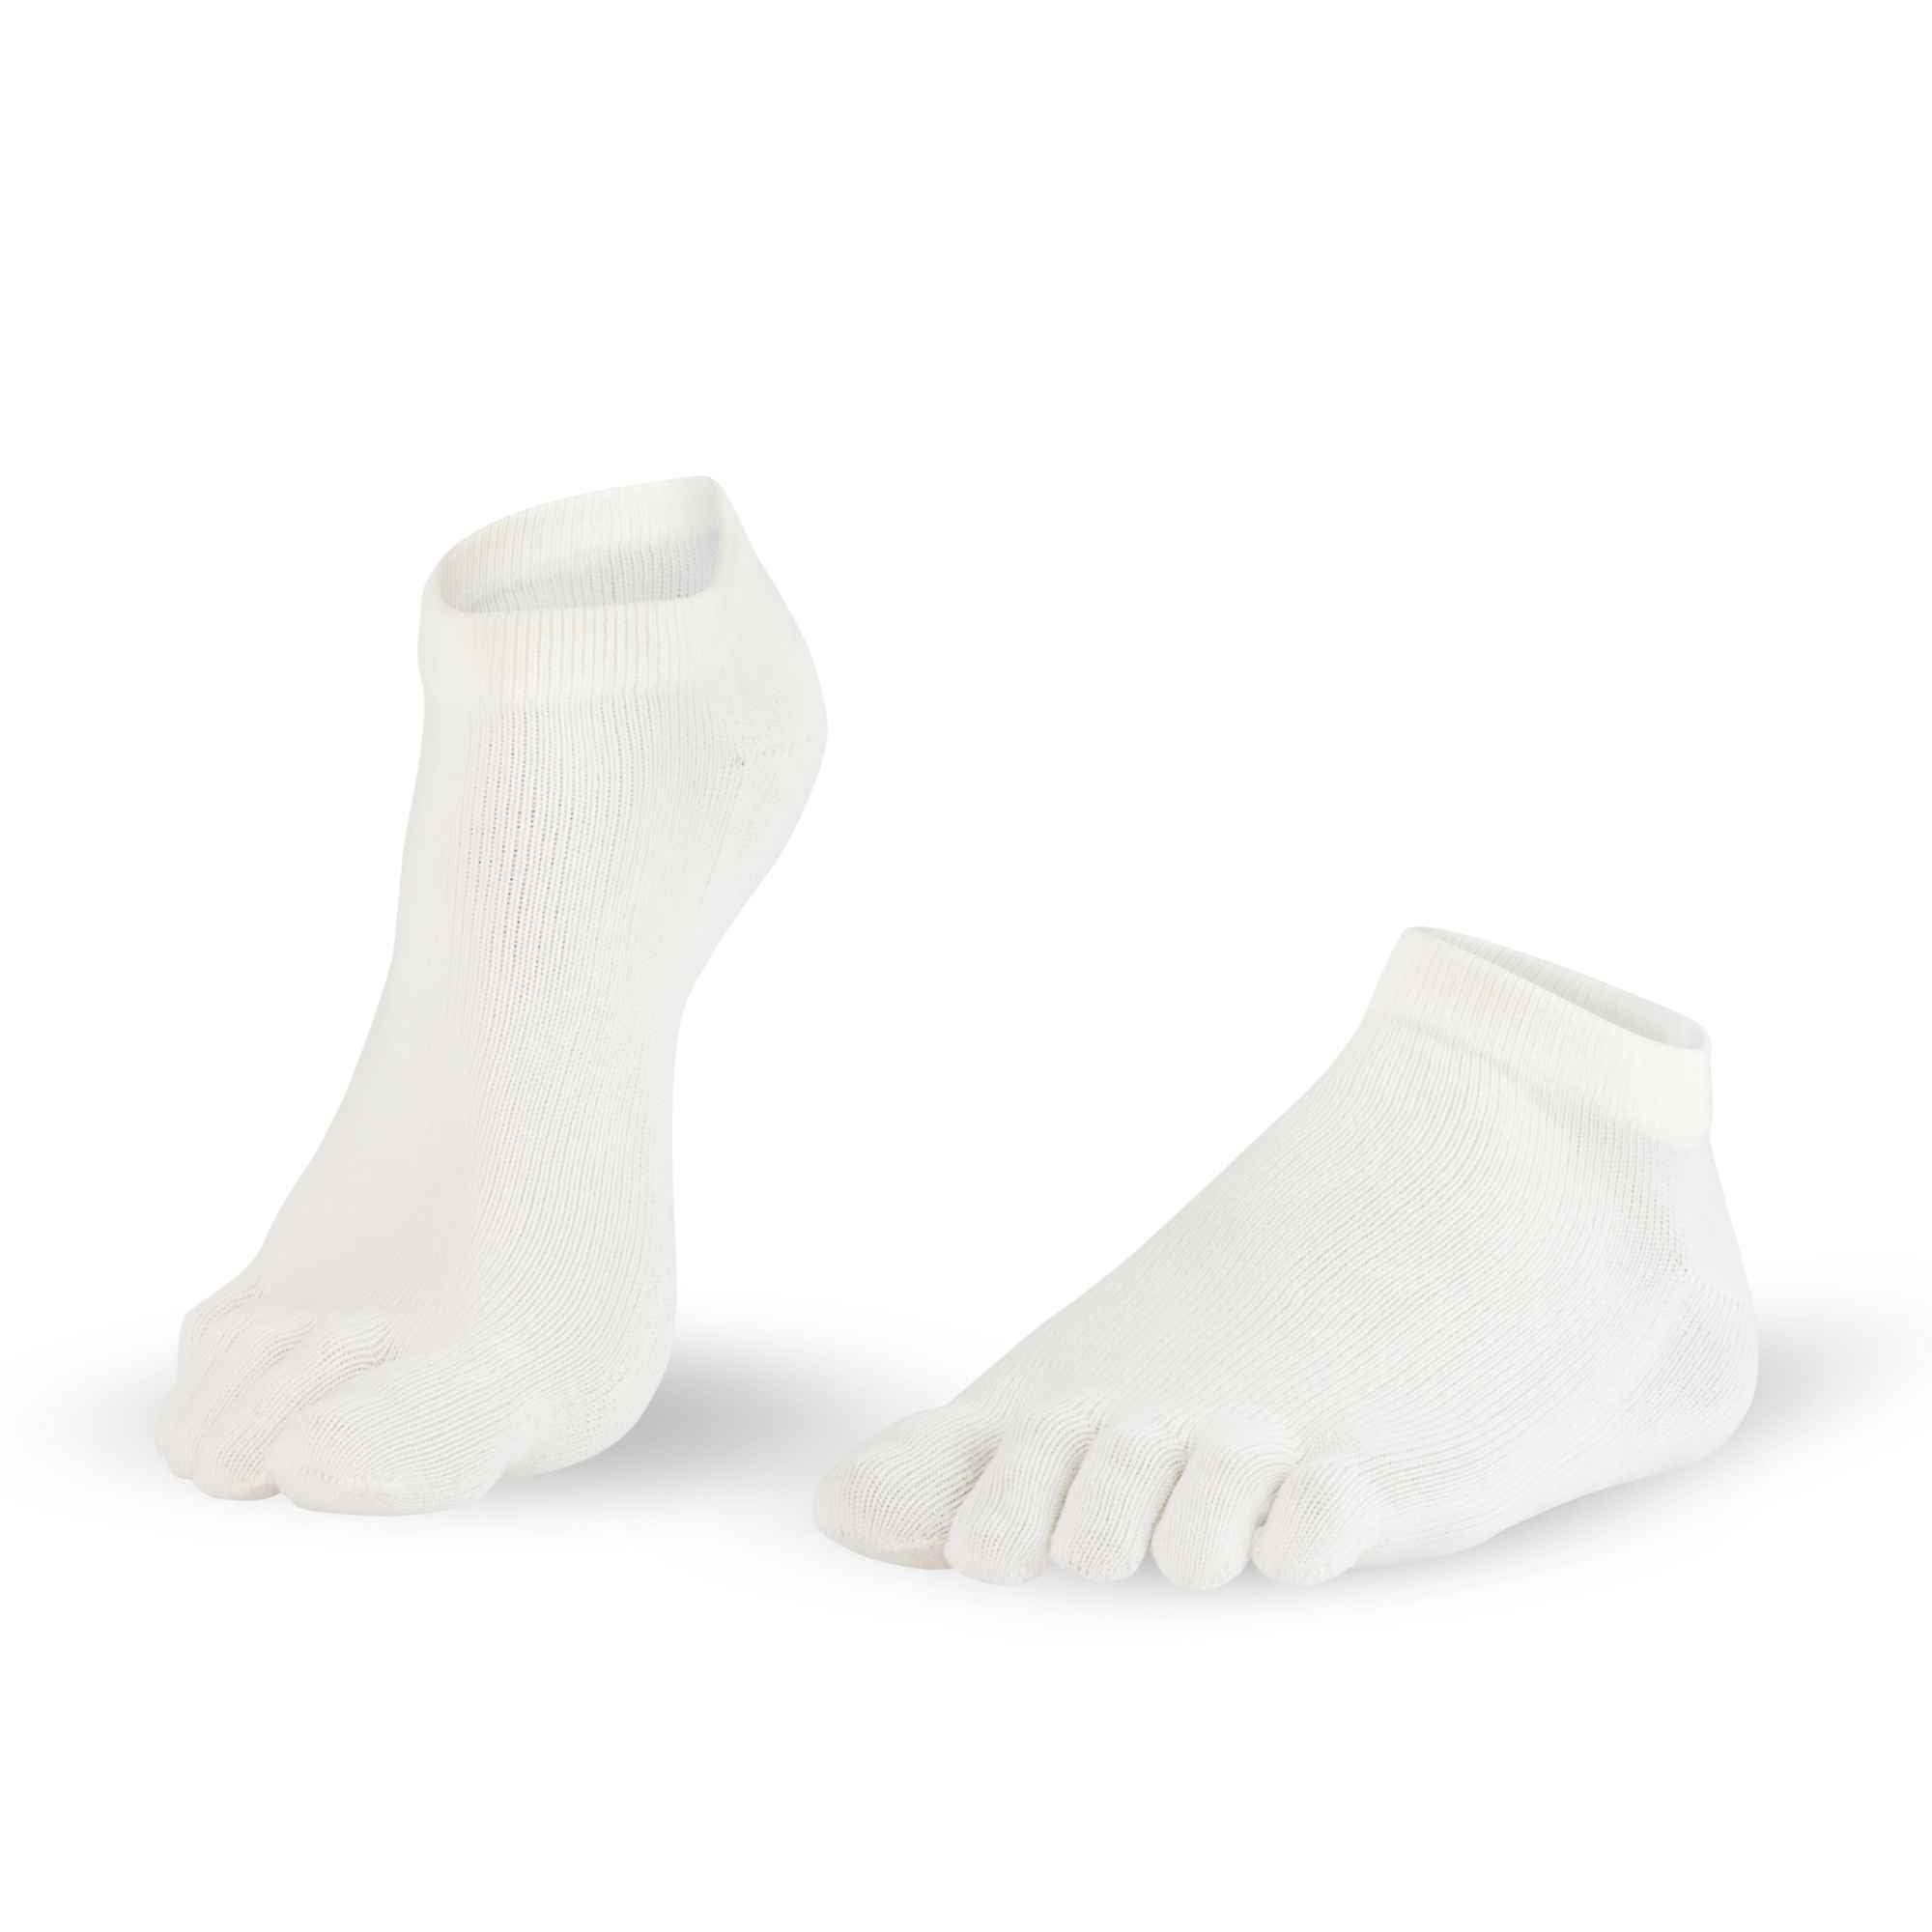 7 Dr Foot Silver Protect Sneaker Toe Socks White Men Women Silver Fiber